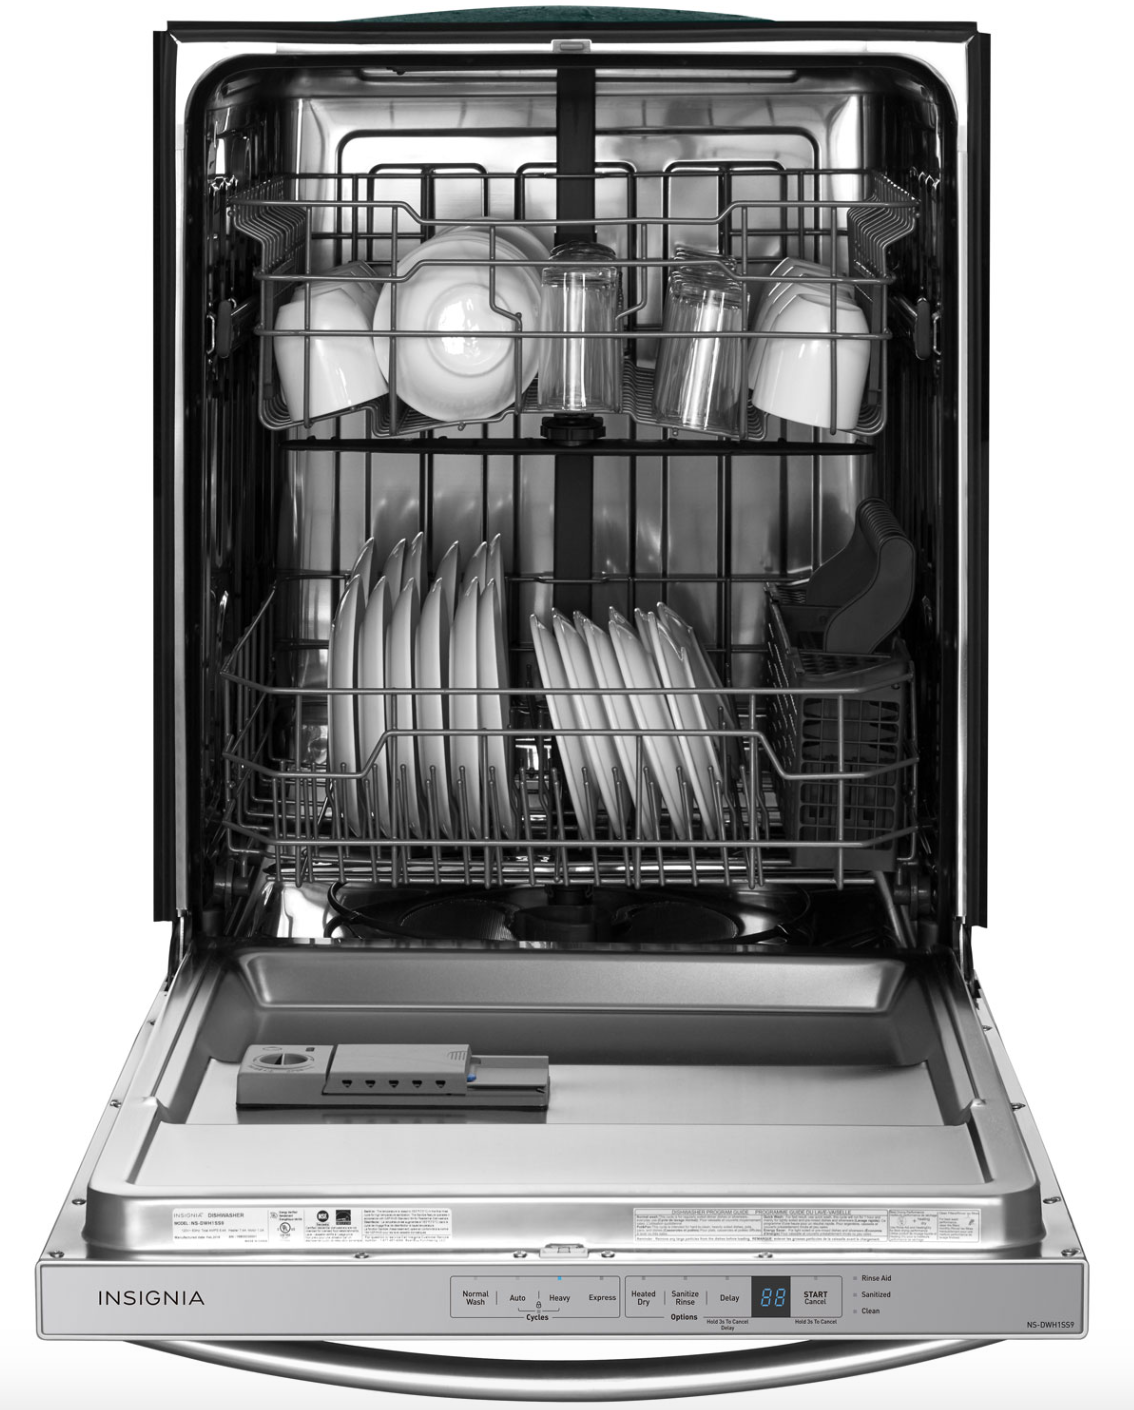 Insignia dishwasher